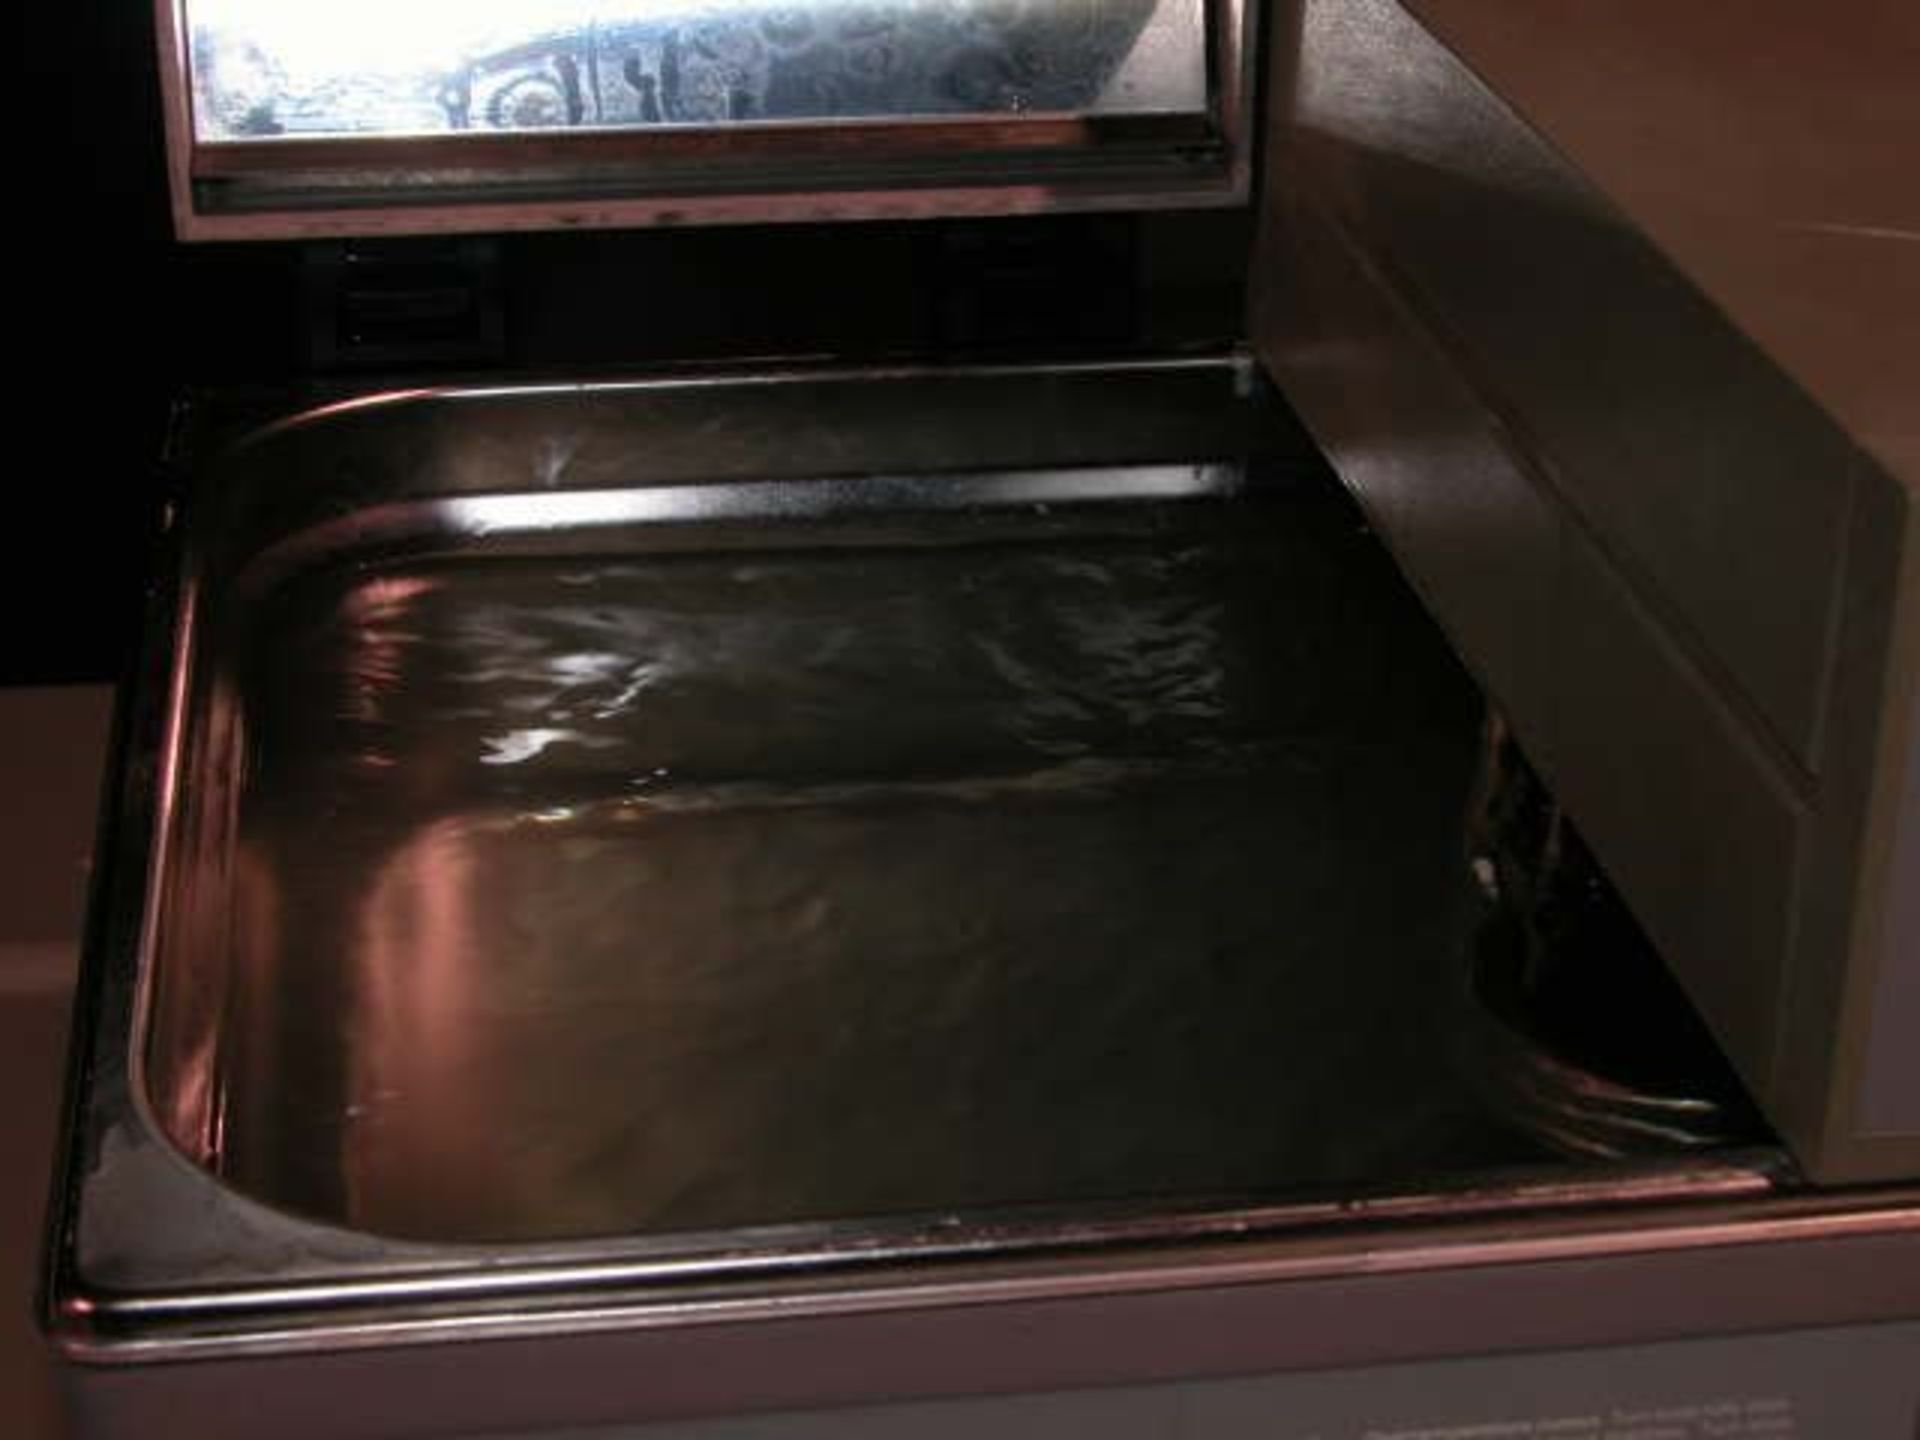 Grant Boekel W14 Heated Circulating Water Bath, Qty 1, 331948533100 - Image 3 of 5